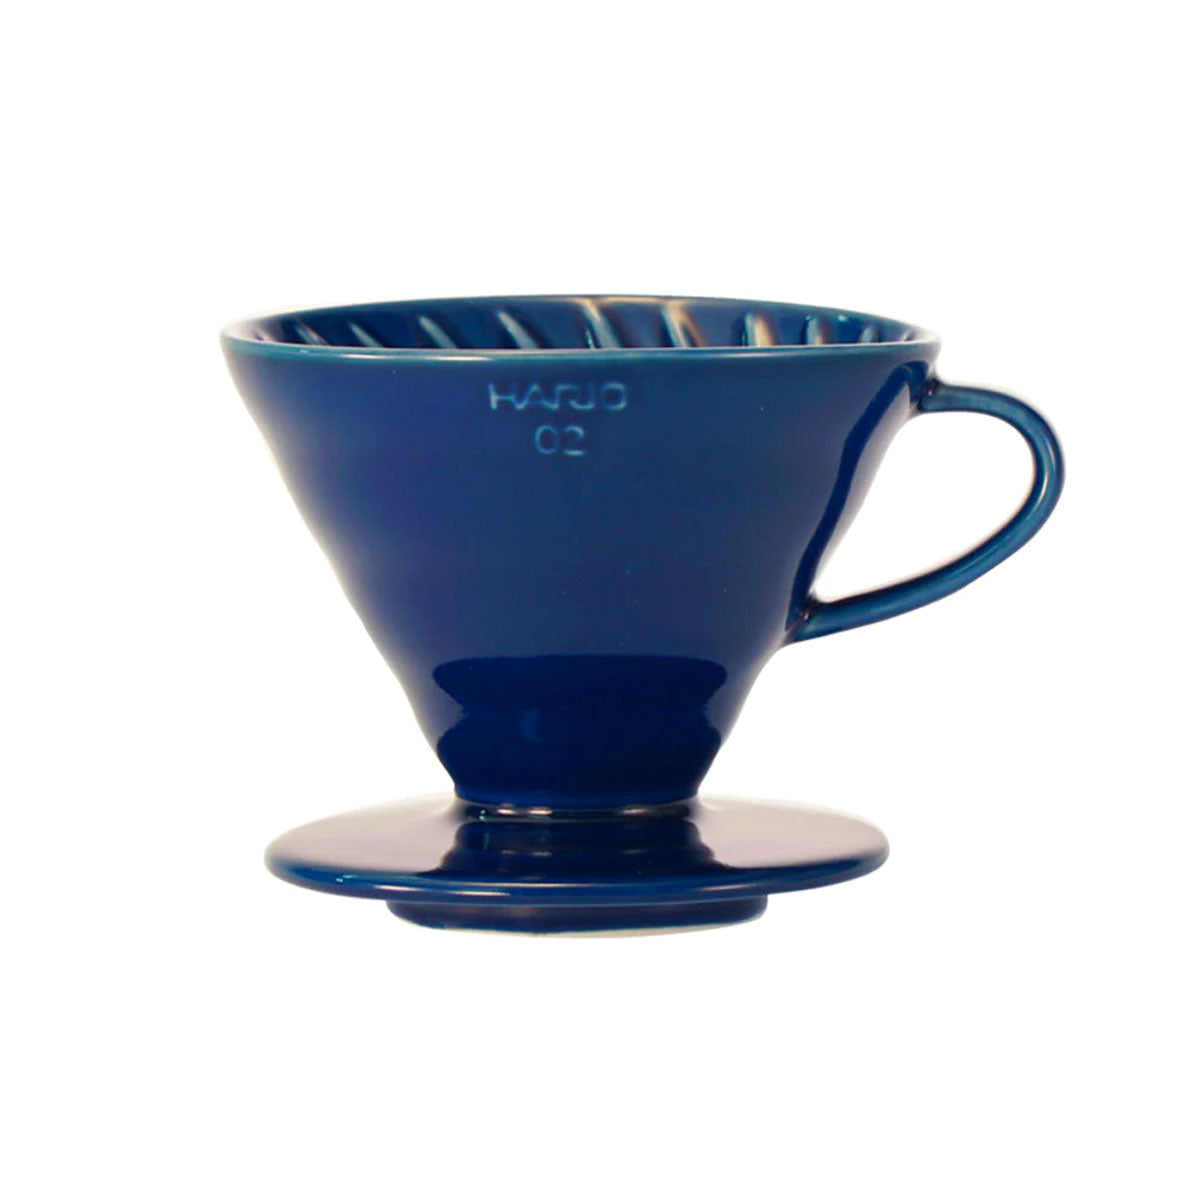 Hario V60-02 Ceramic Coffee Dripper, Indigo Blue